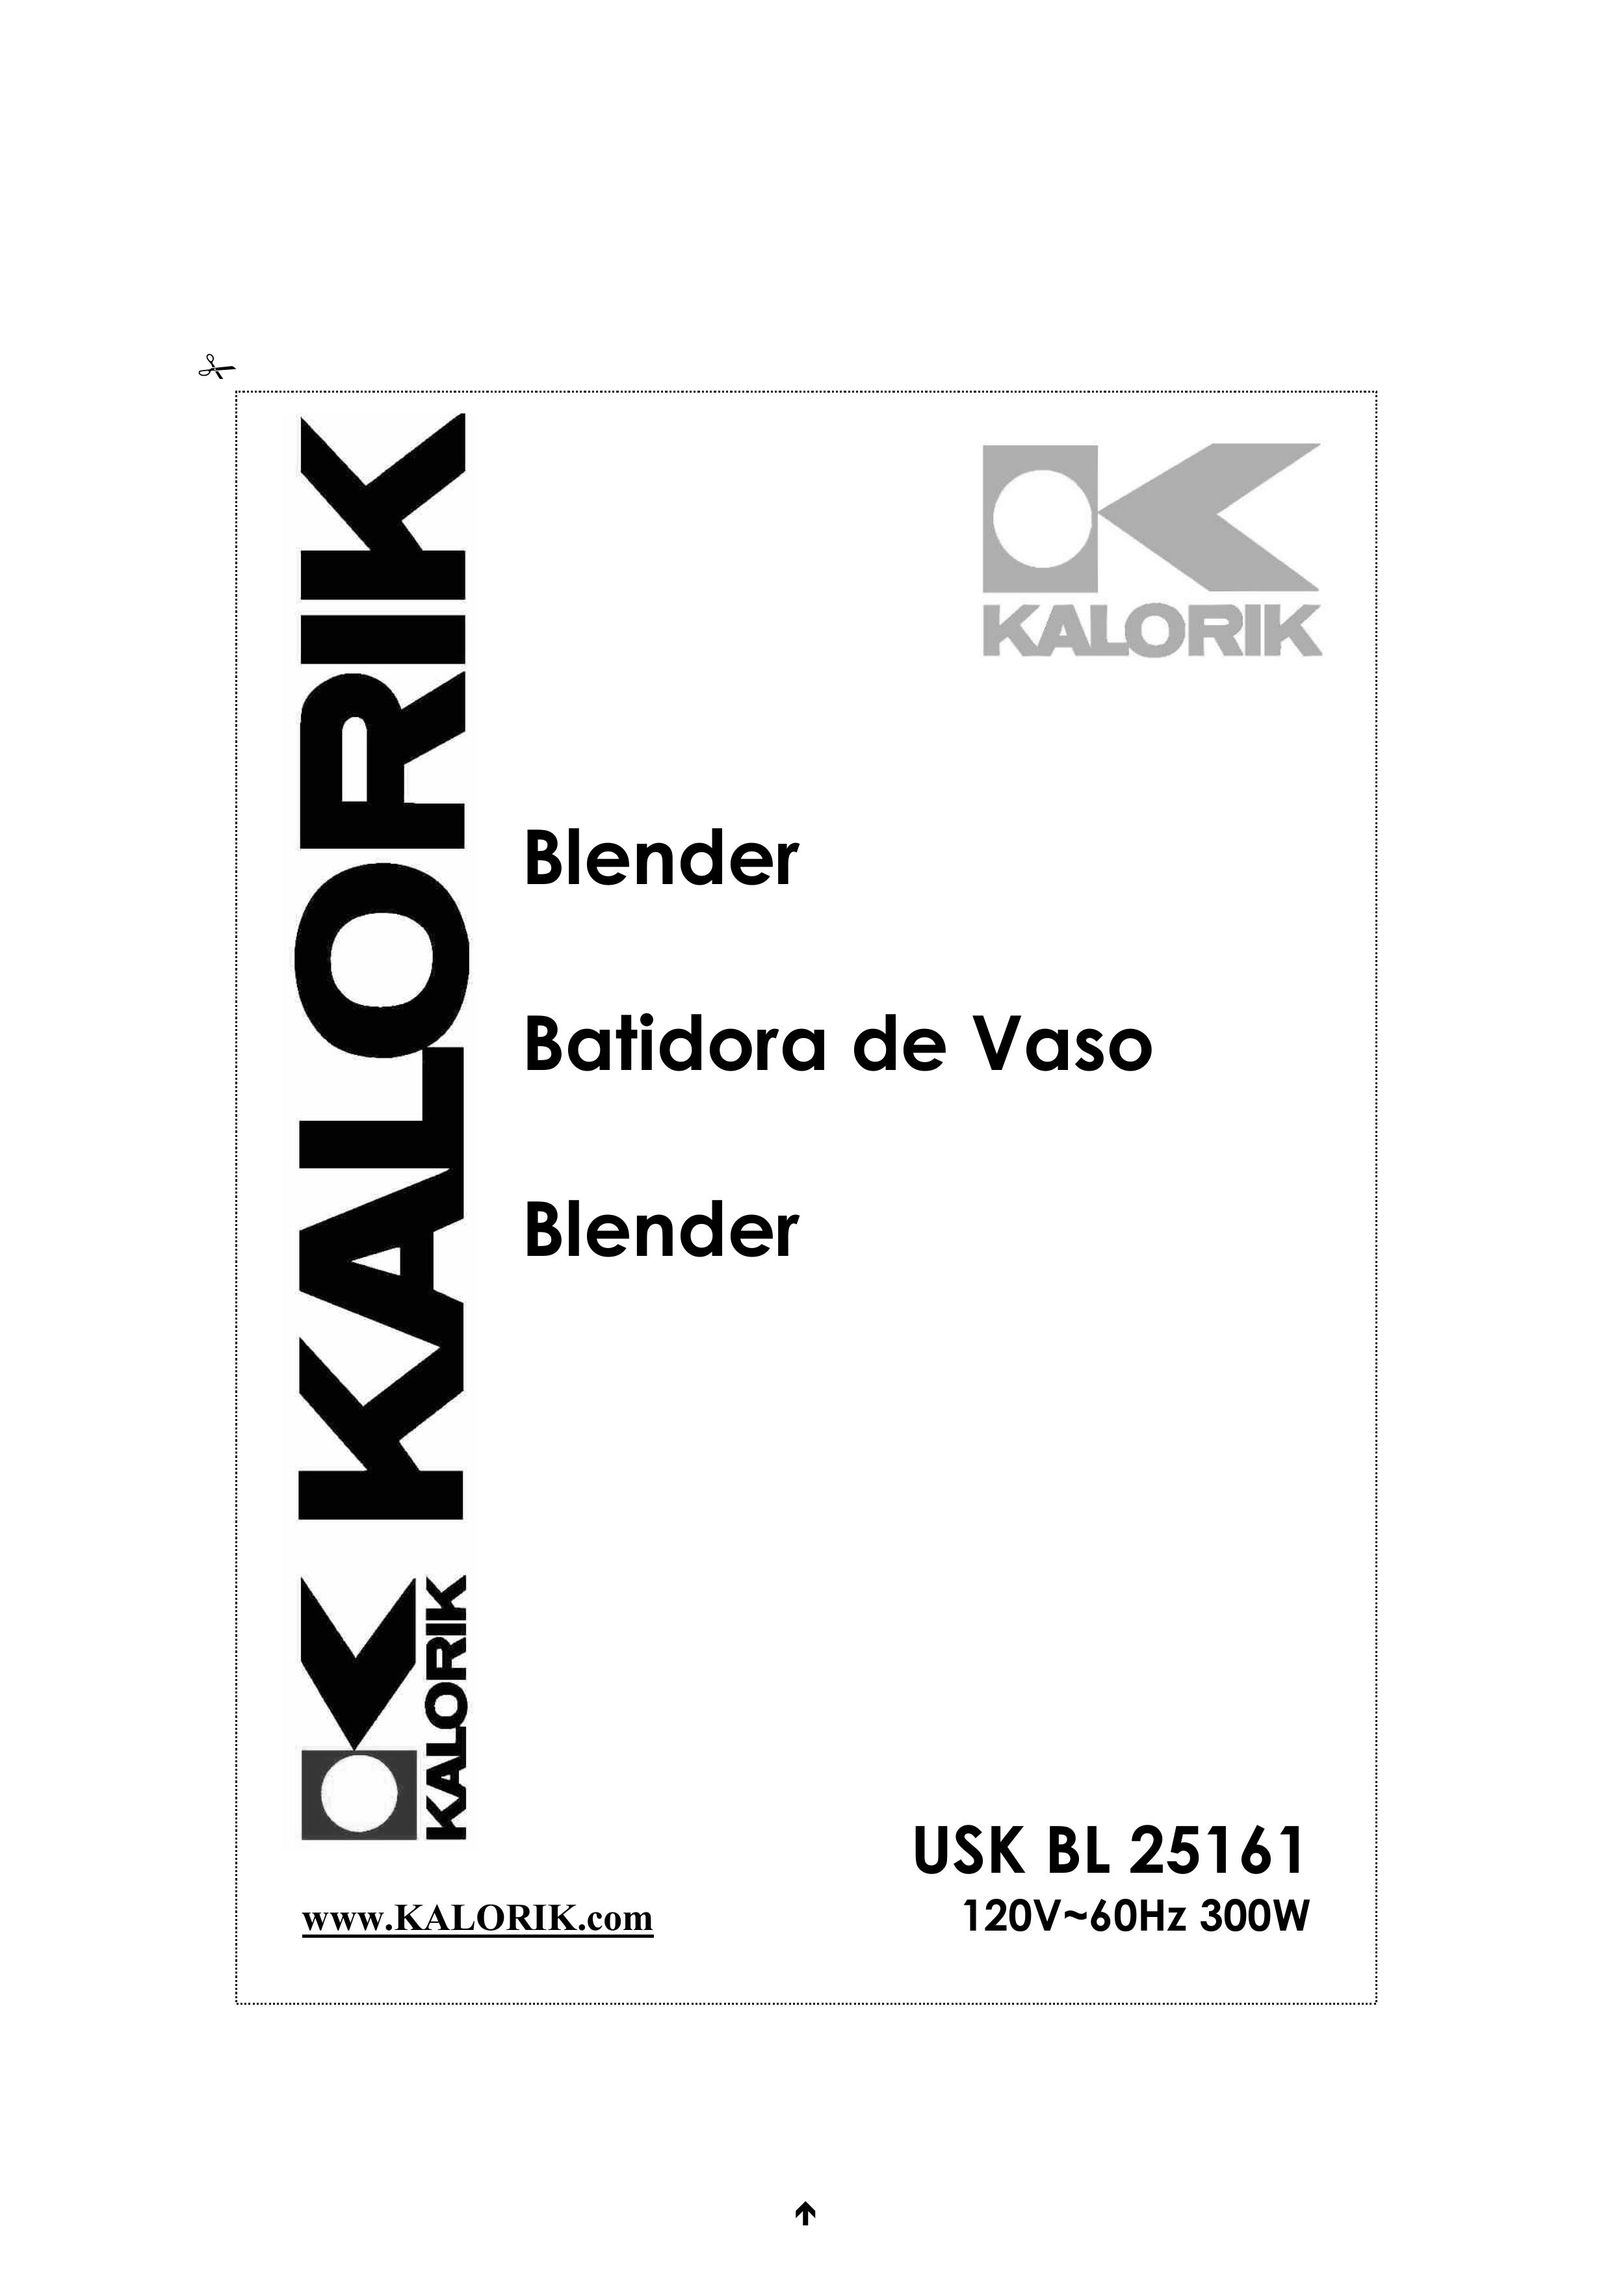 Kalorik usk bl 25161 Blender User Manual